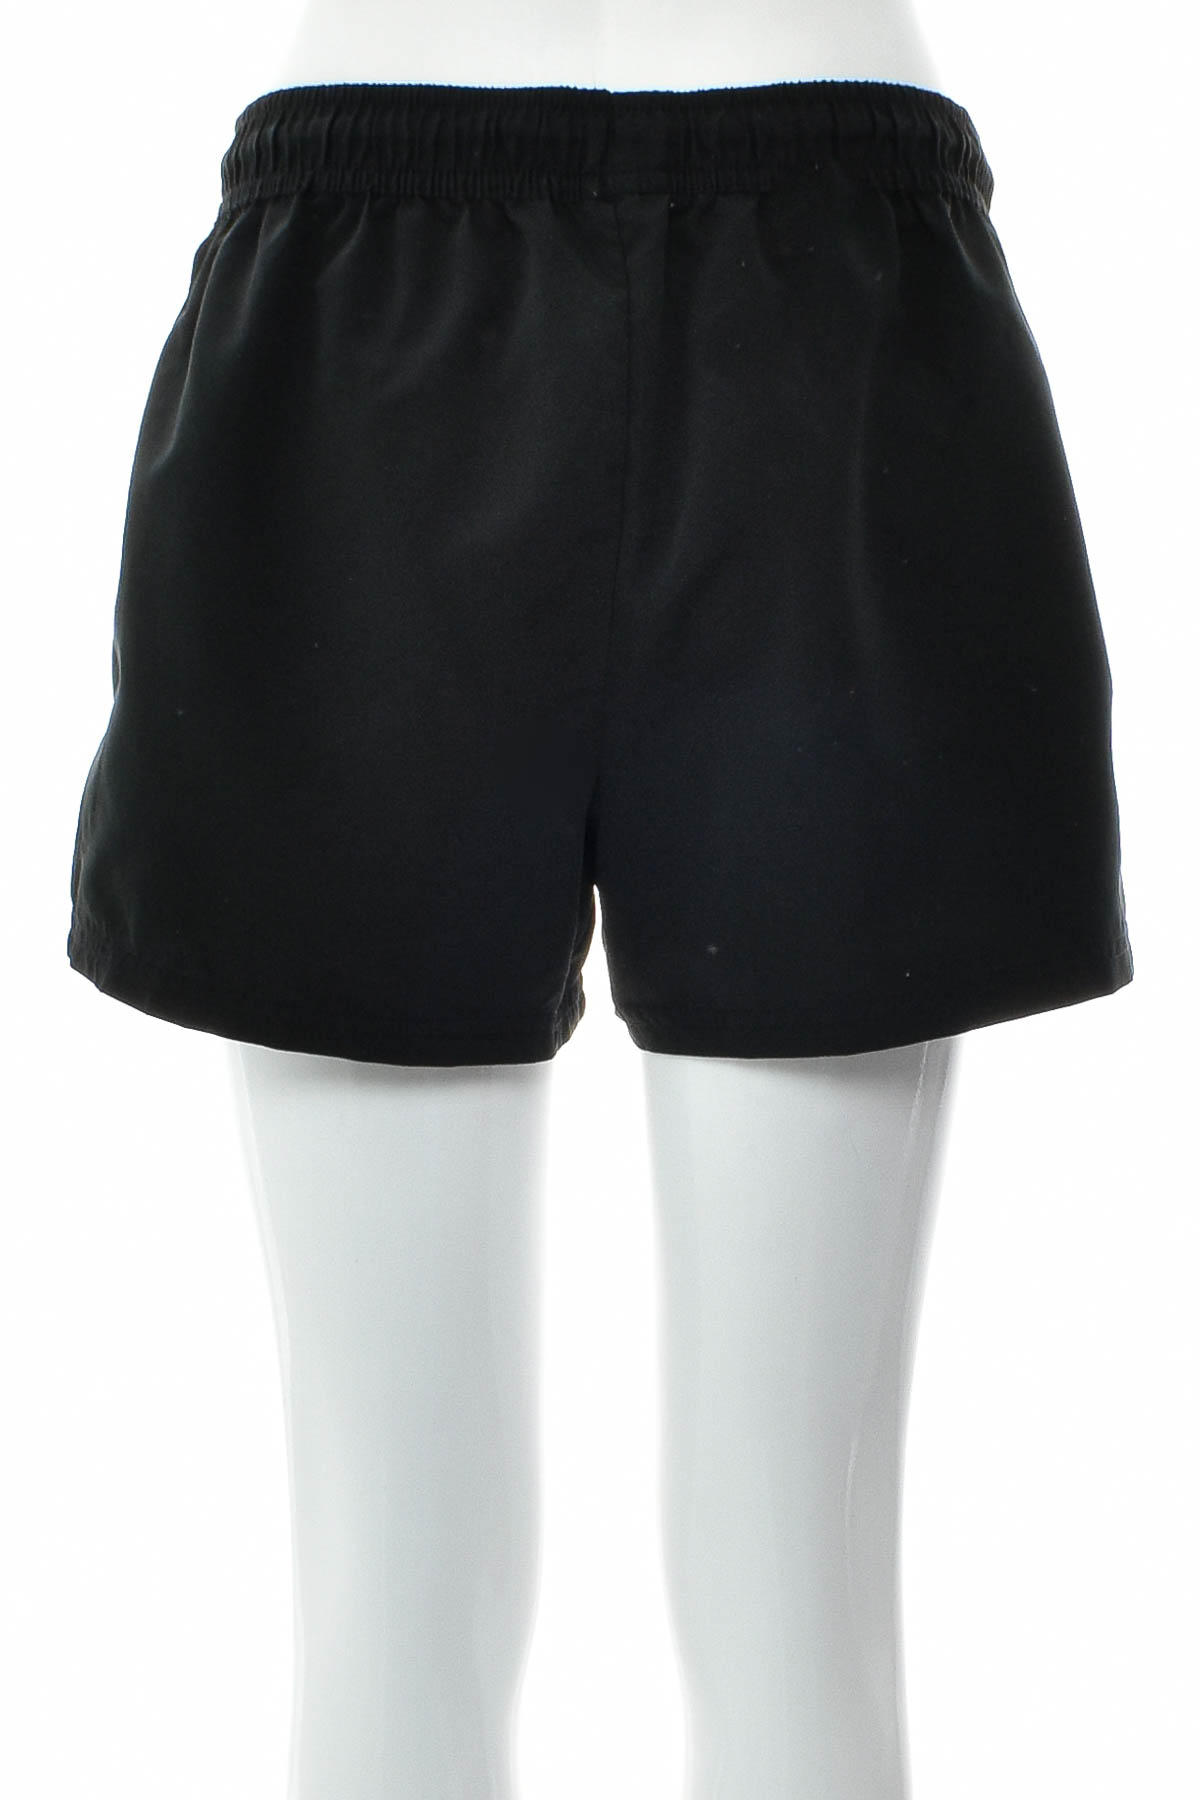 Female shorts - Gina Benotti - 1